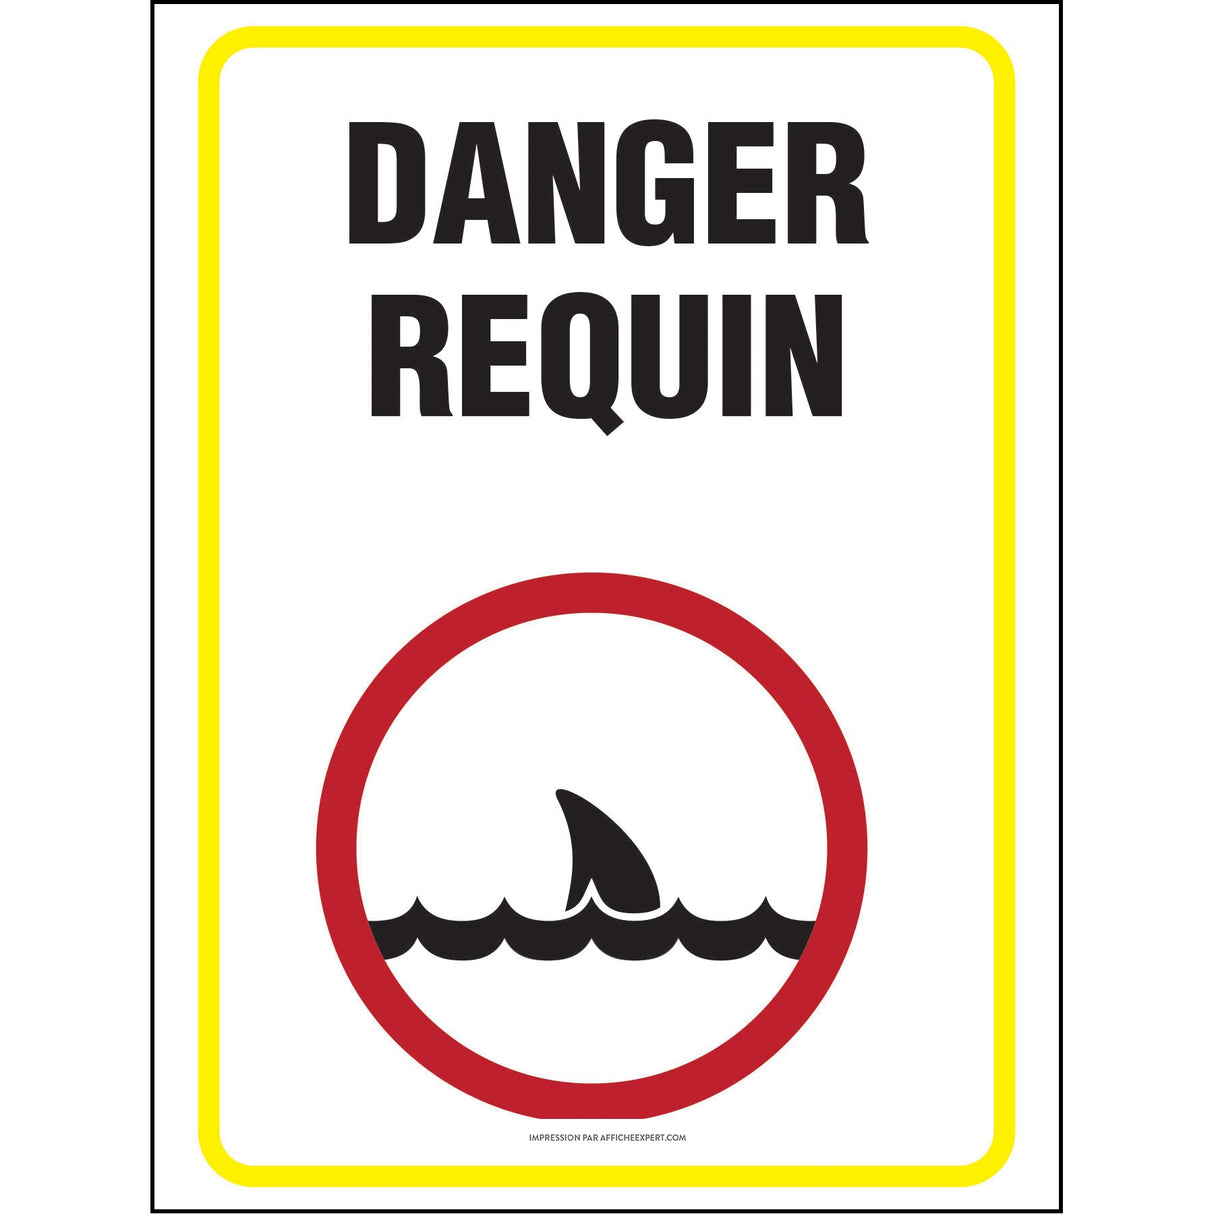 Affiche - Danger - Requin